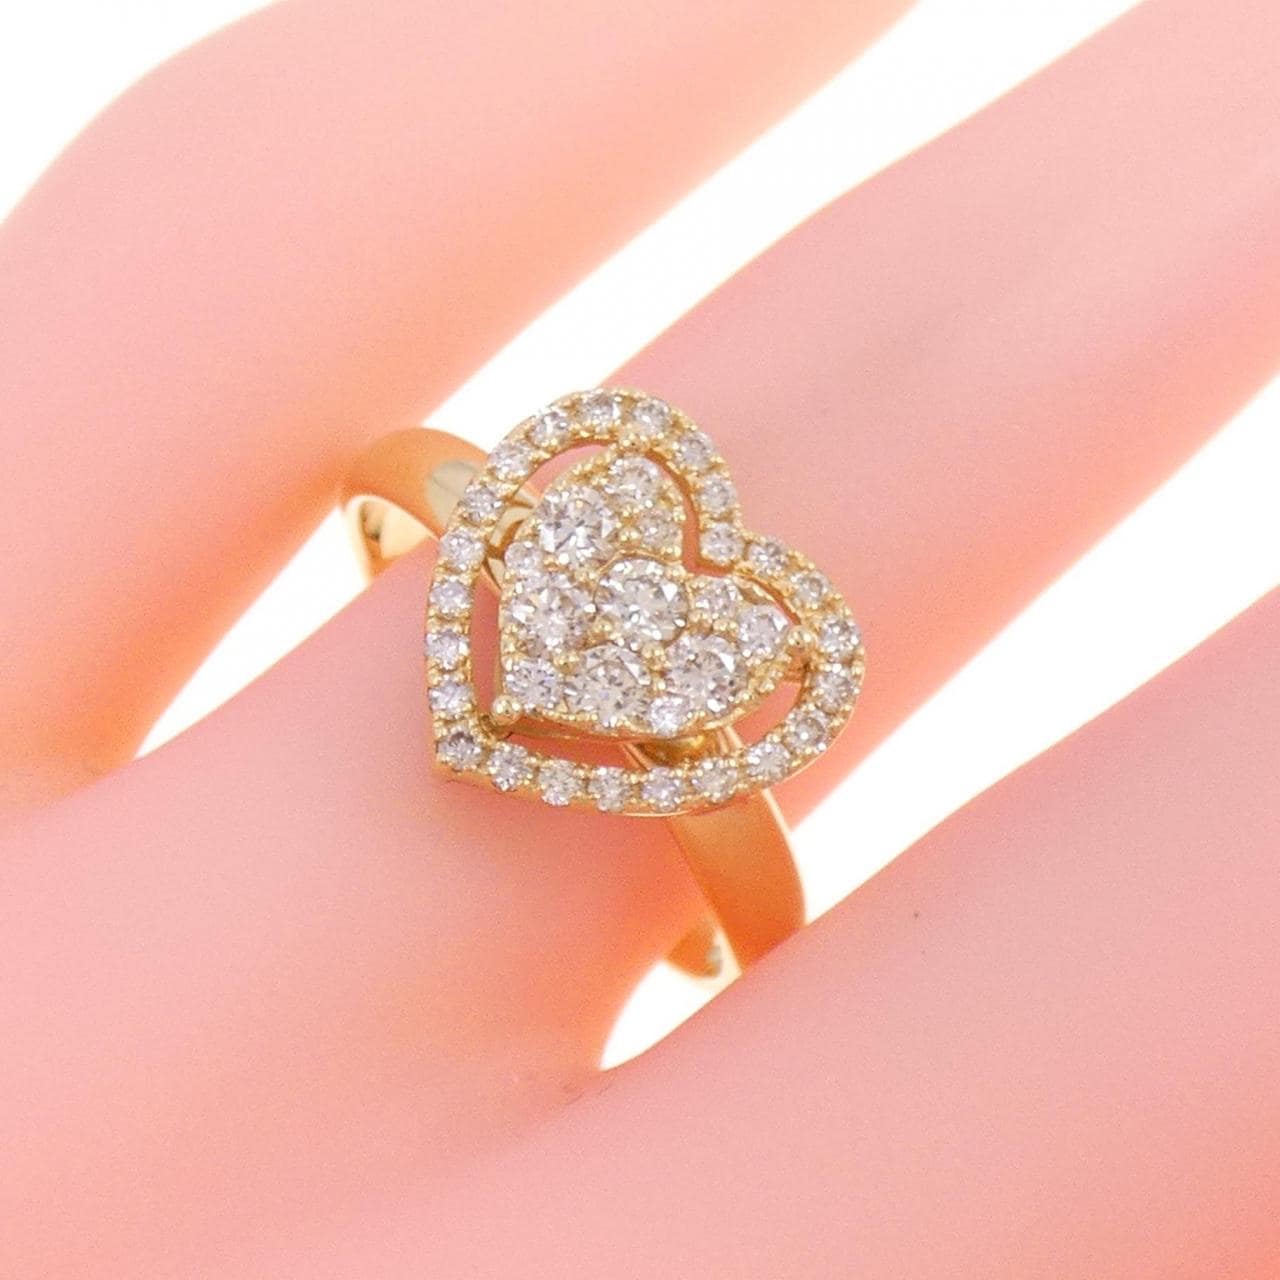 K18YG heart Diamond ring 0.60CT